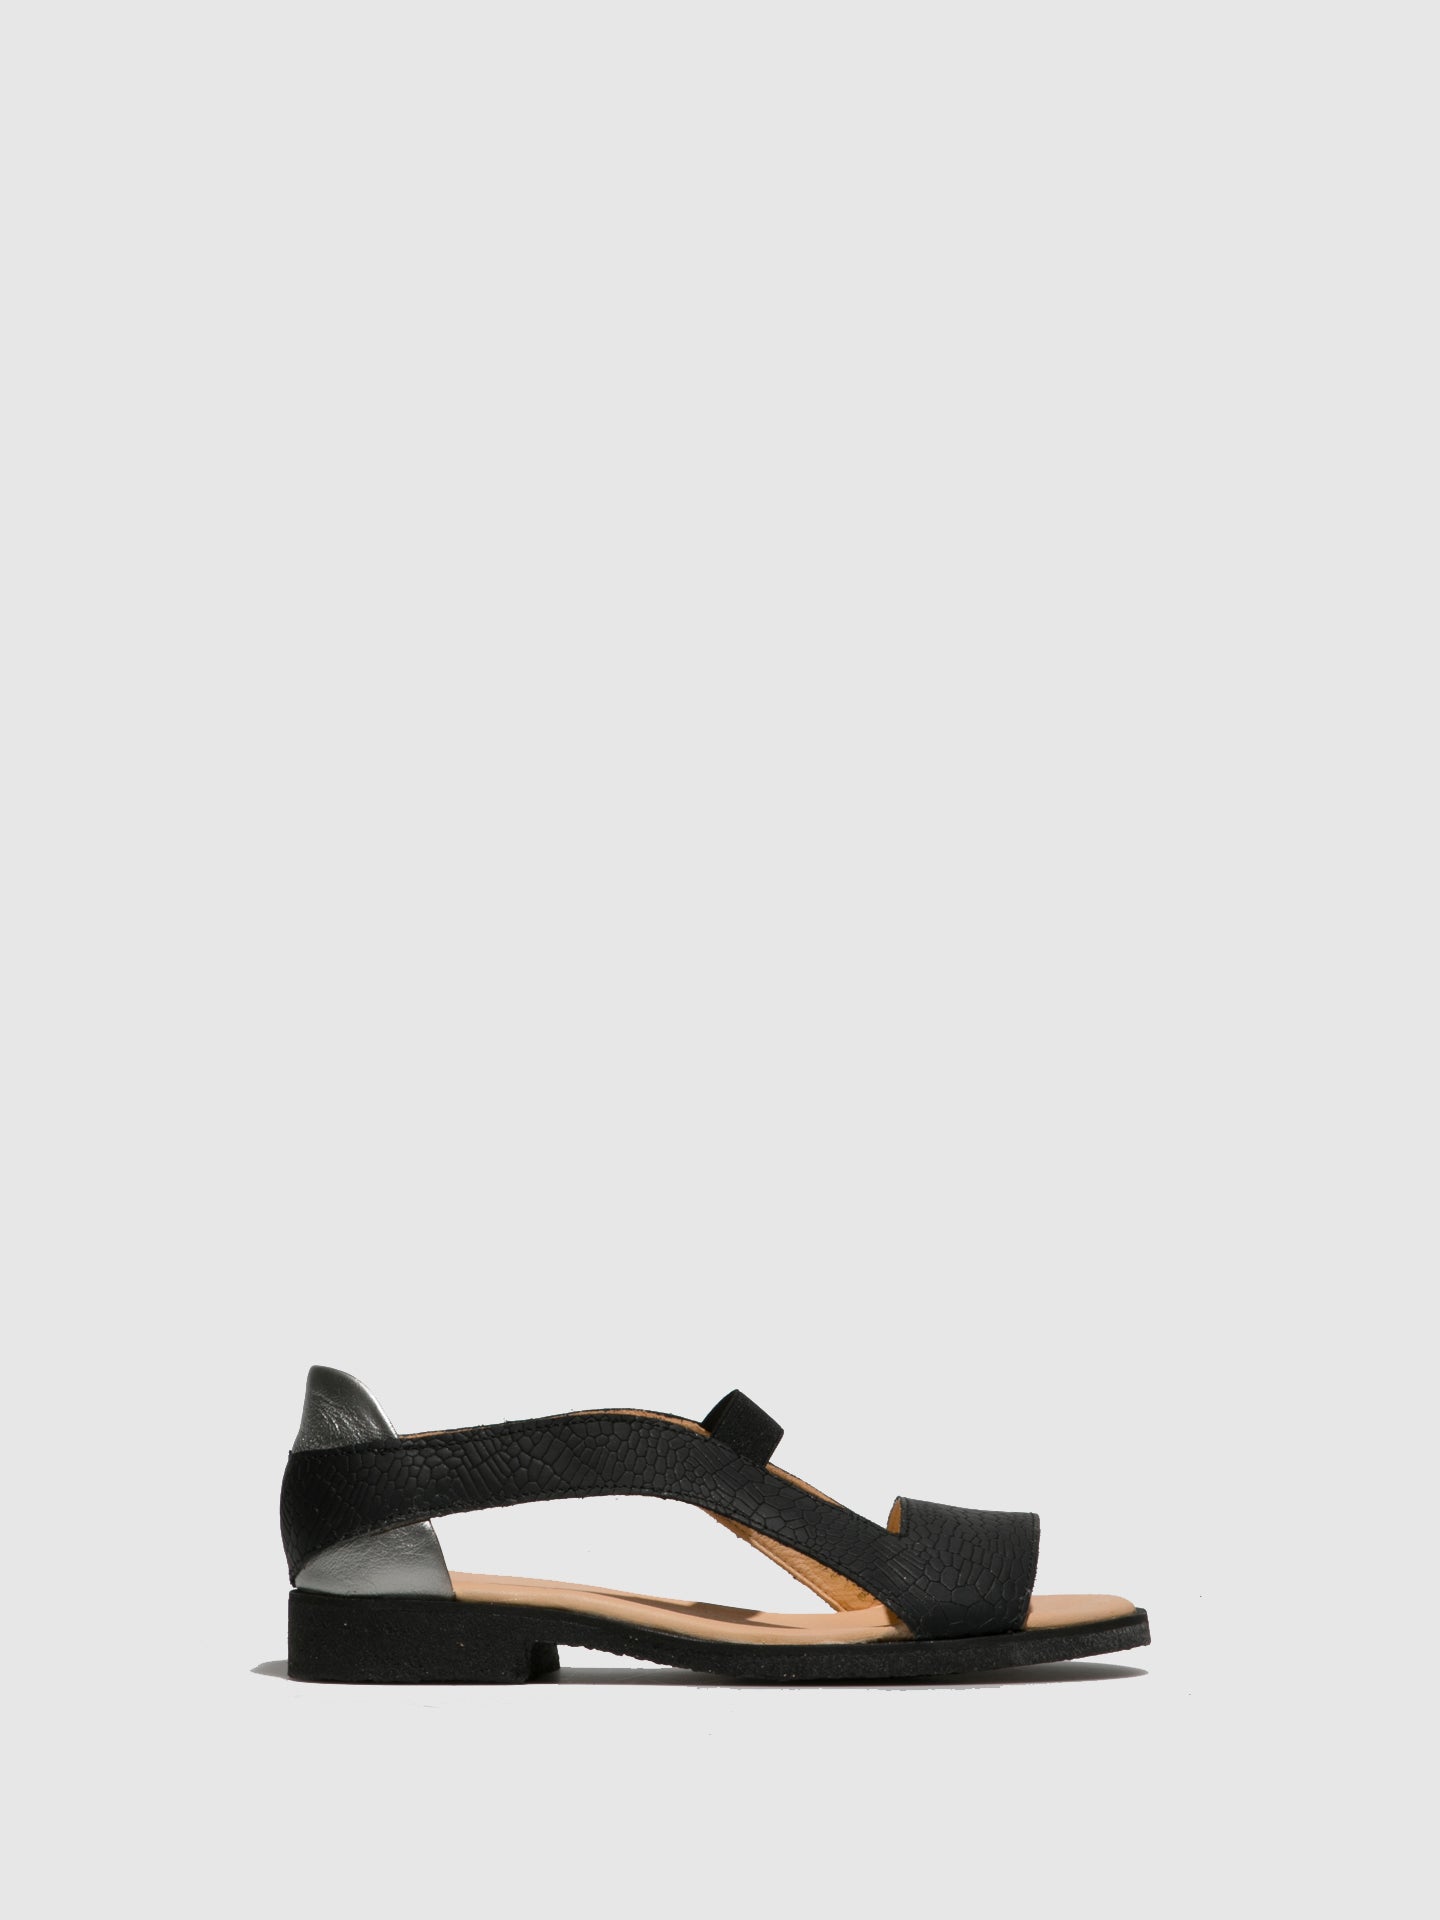 Marita Moreno Gray Black Flat Sandals